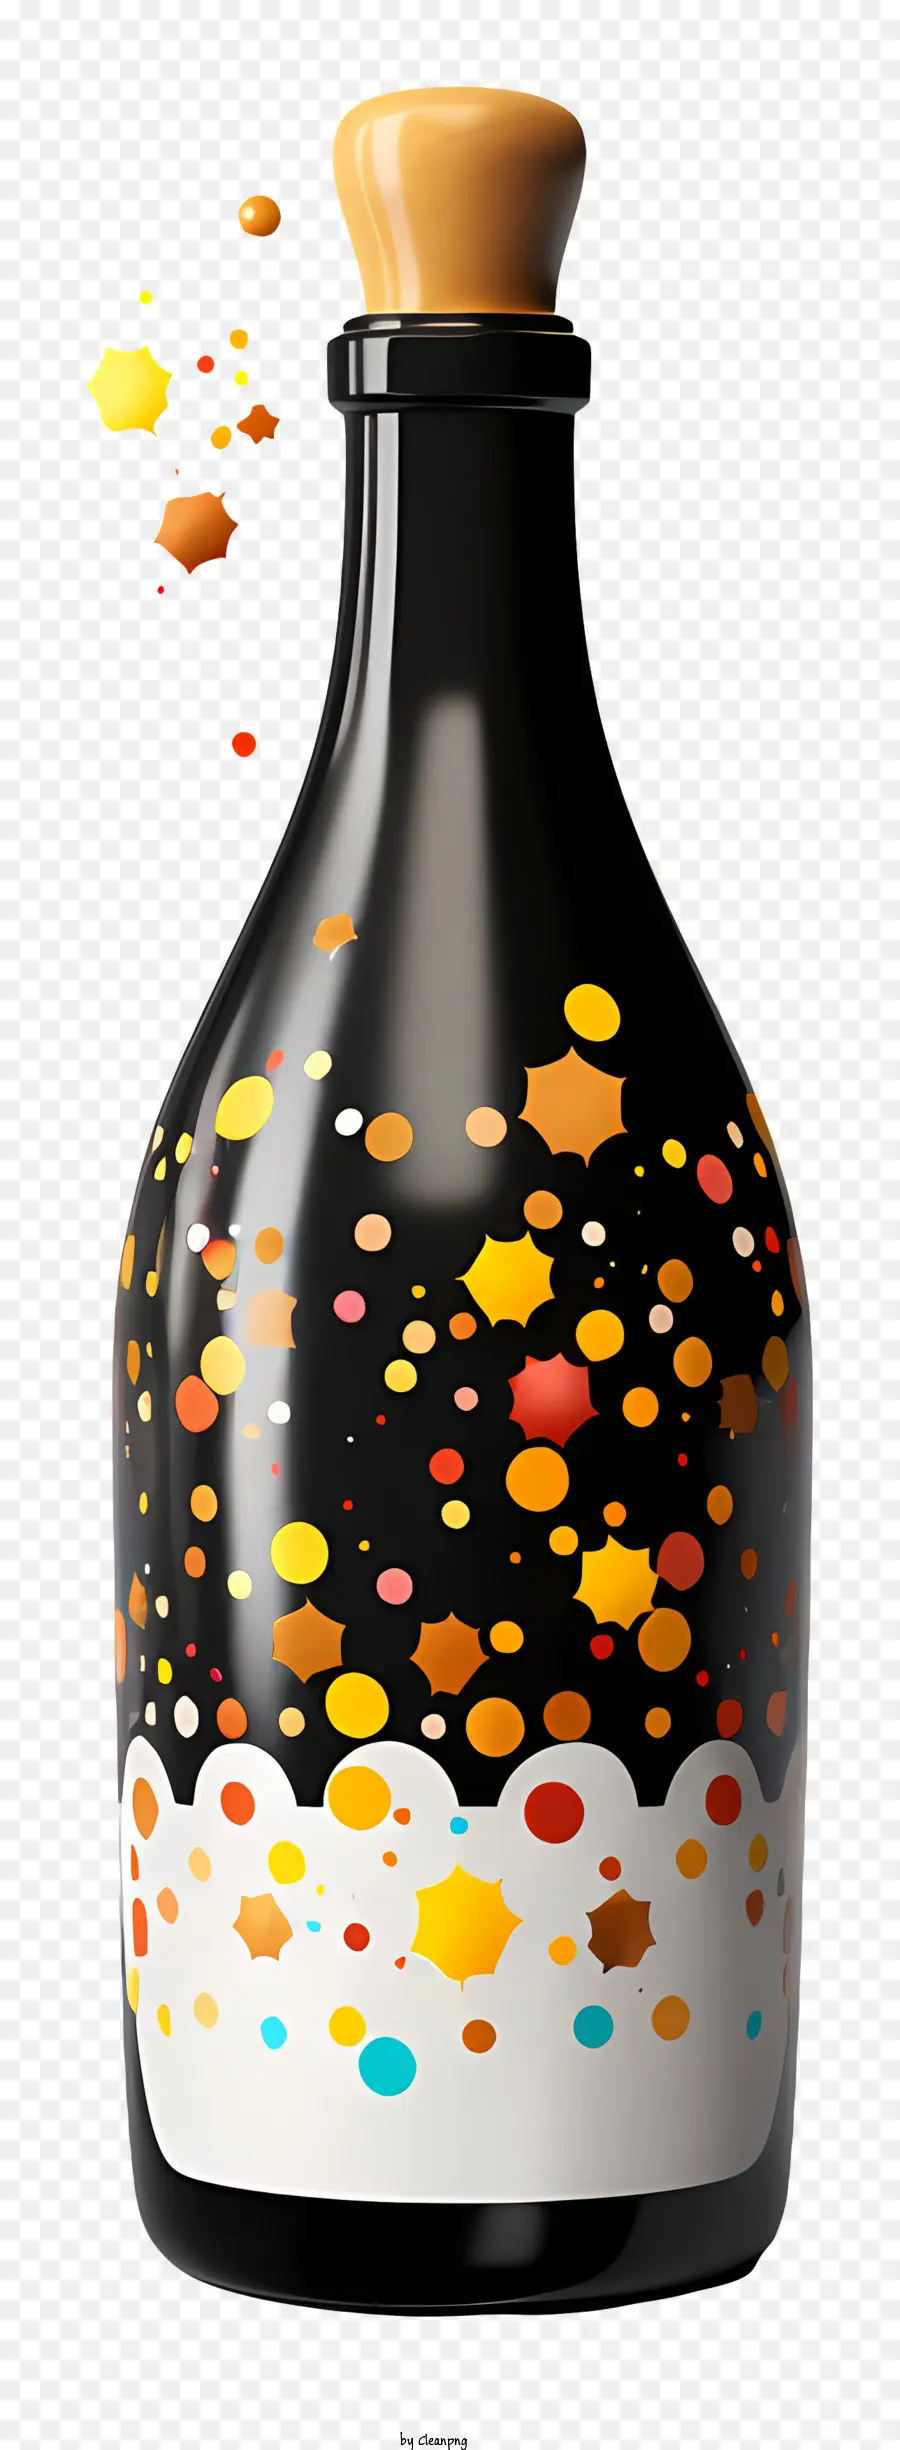 glass bottle wooden cap colorful confetti sparkling confetti black background